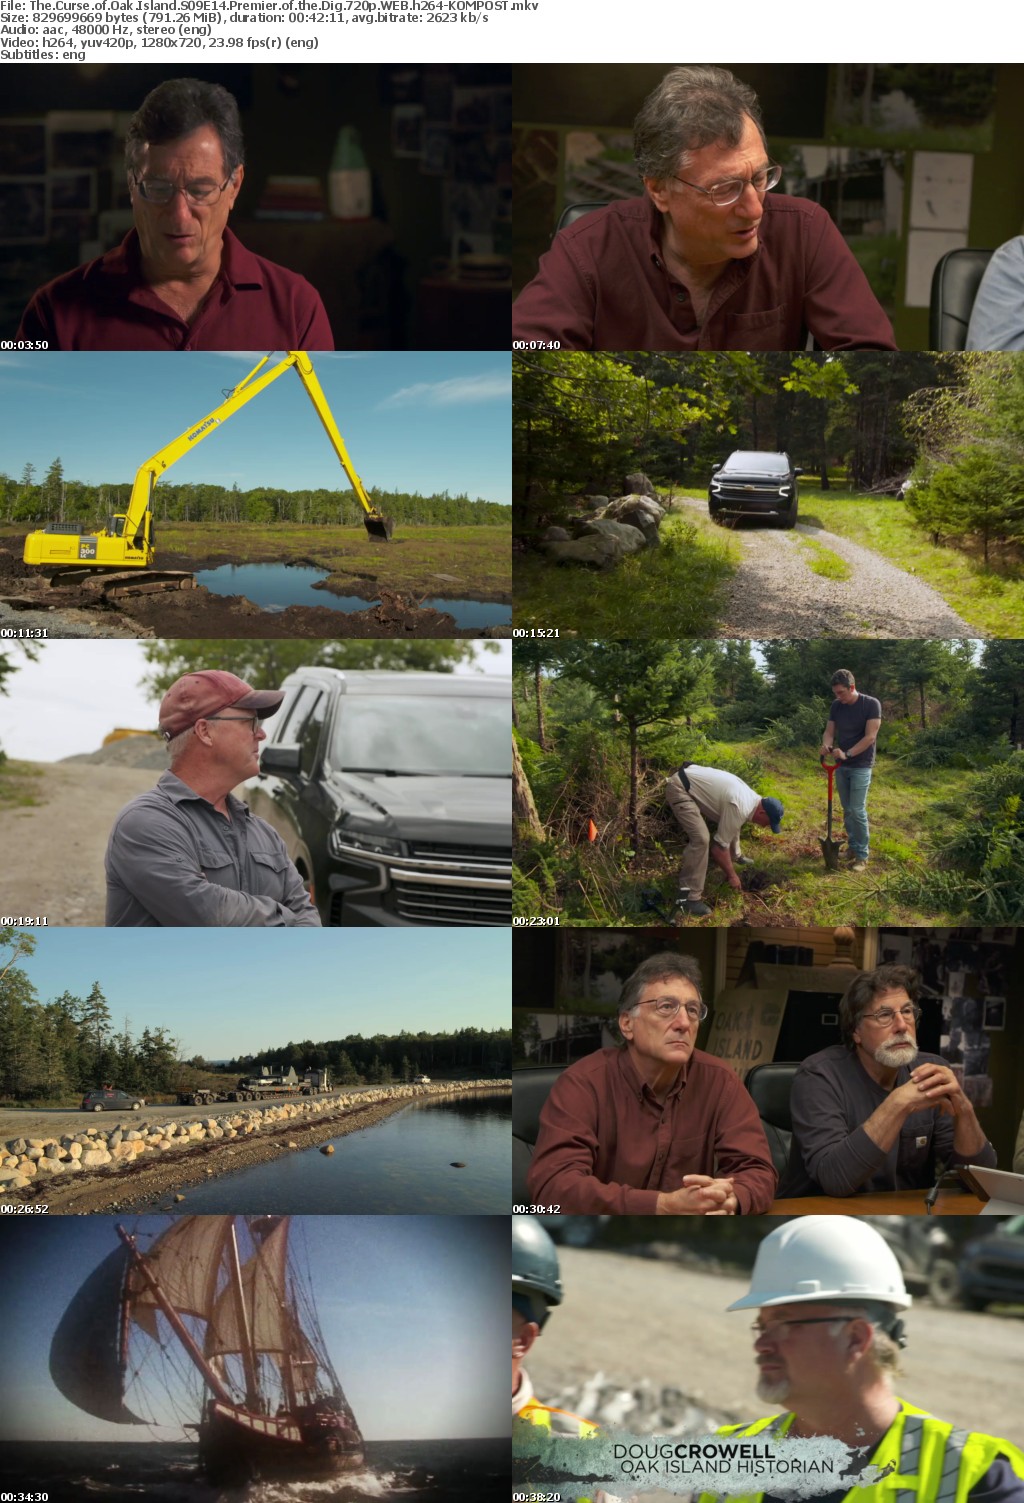 The Curse of Oak Island S09E14 Premier of the Dig 720p WEB h264-KOMPOST